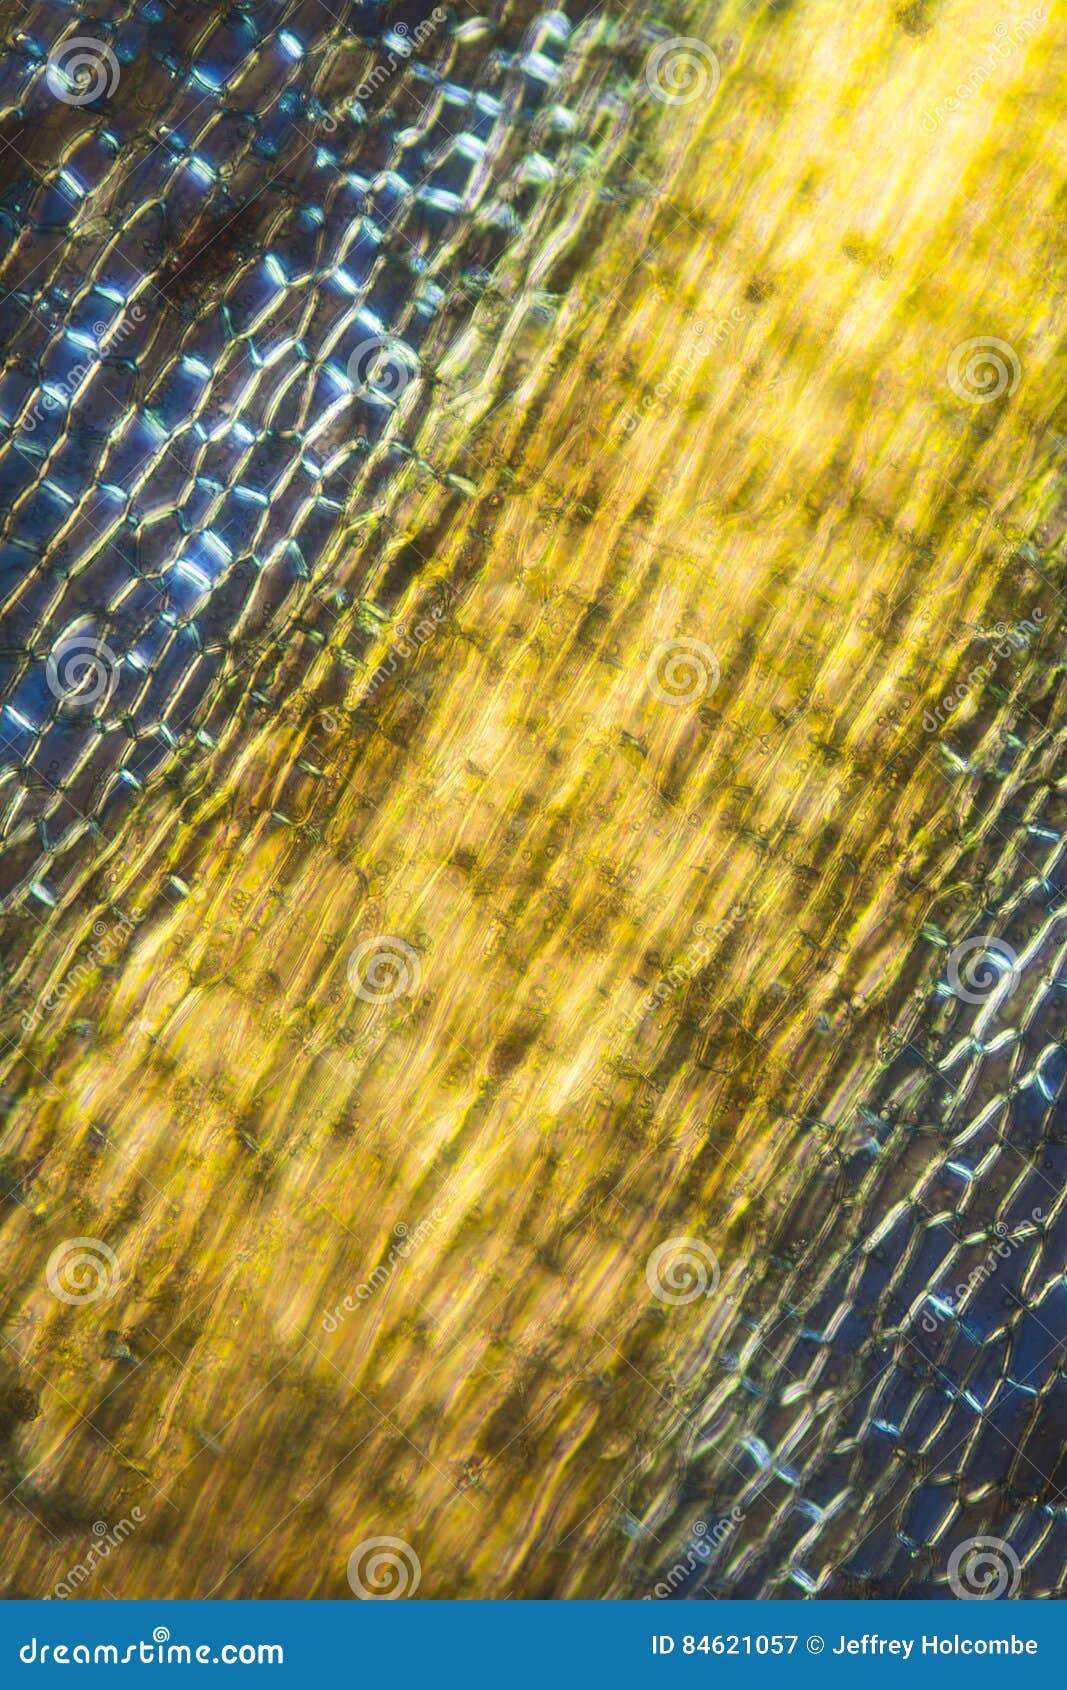 polarizing micrograph of the midrib of a moss leaf.